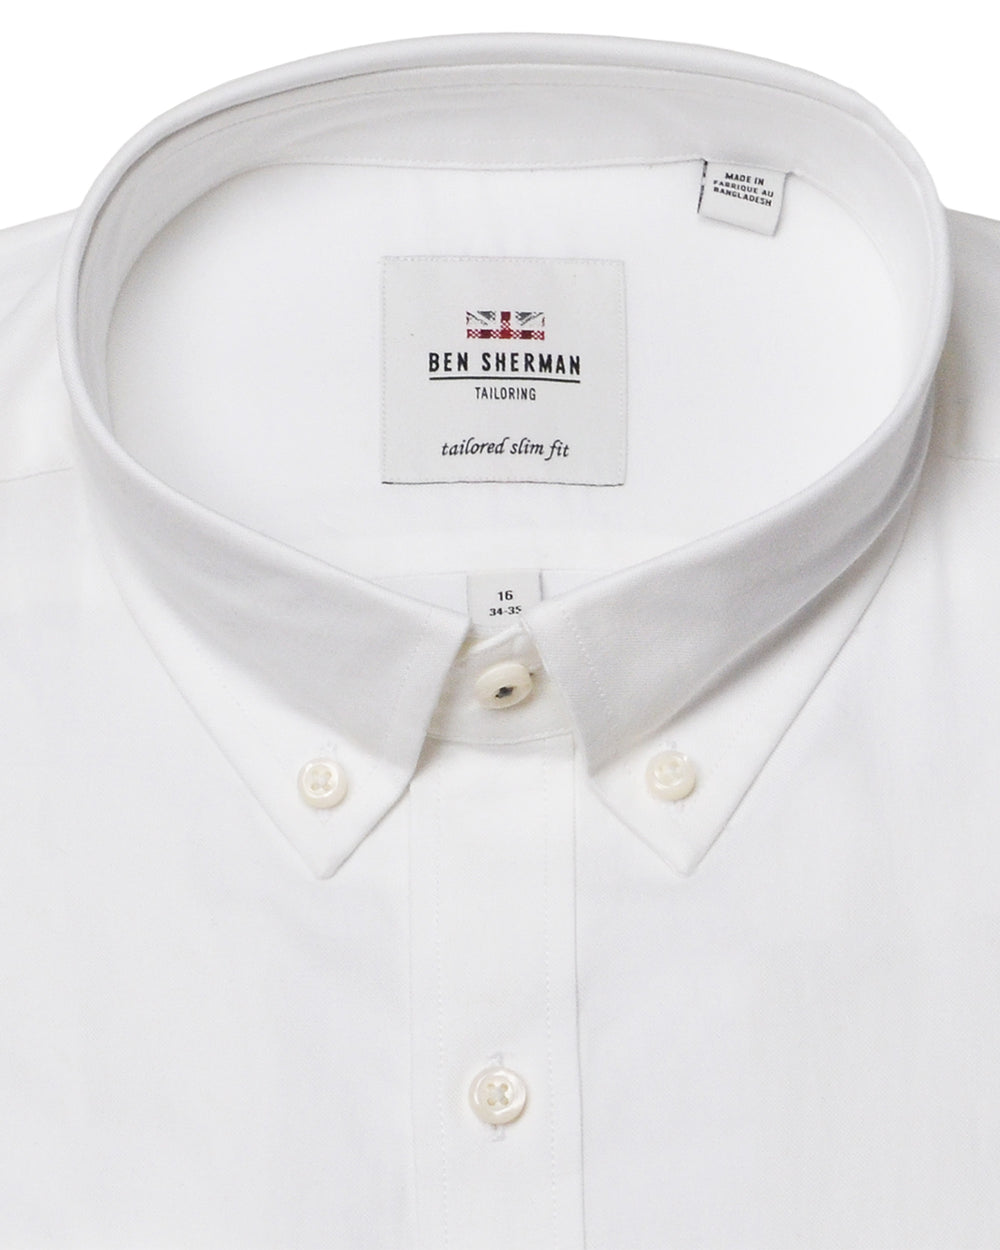 White Solid Oxford Slim Fit Dress Shirt - Ben Sherman